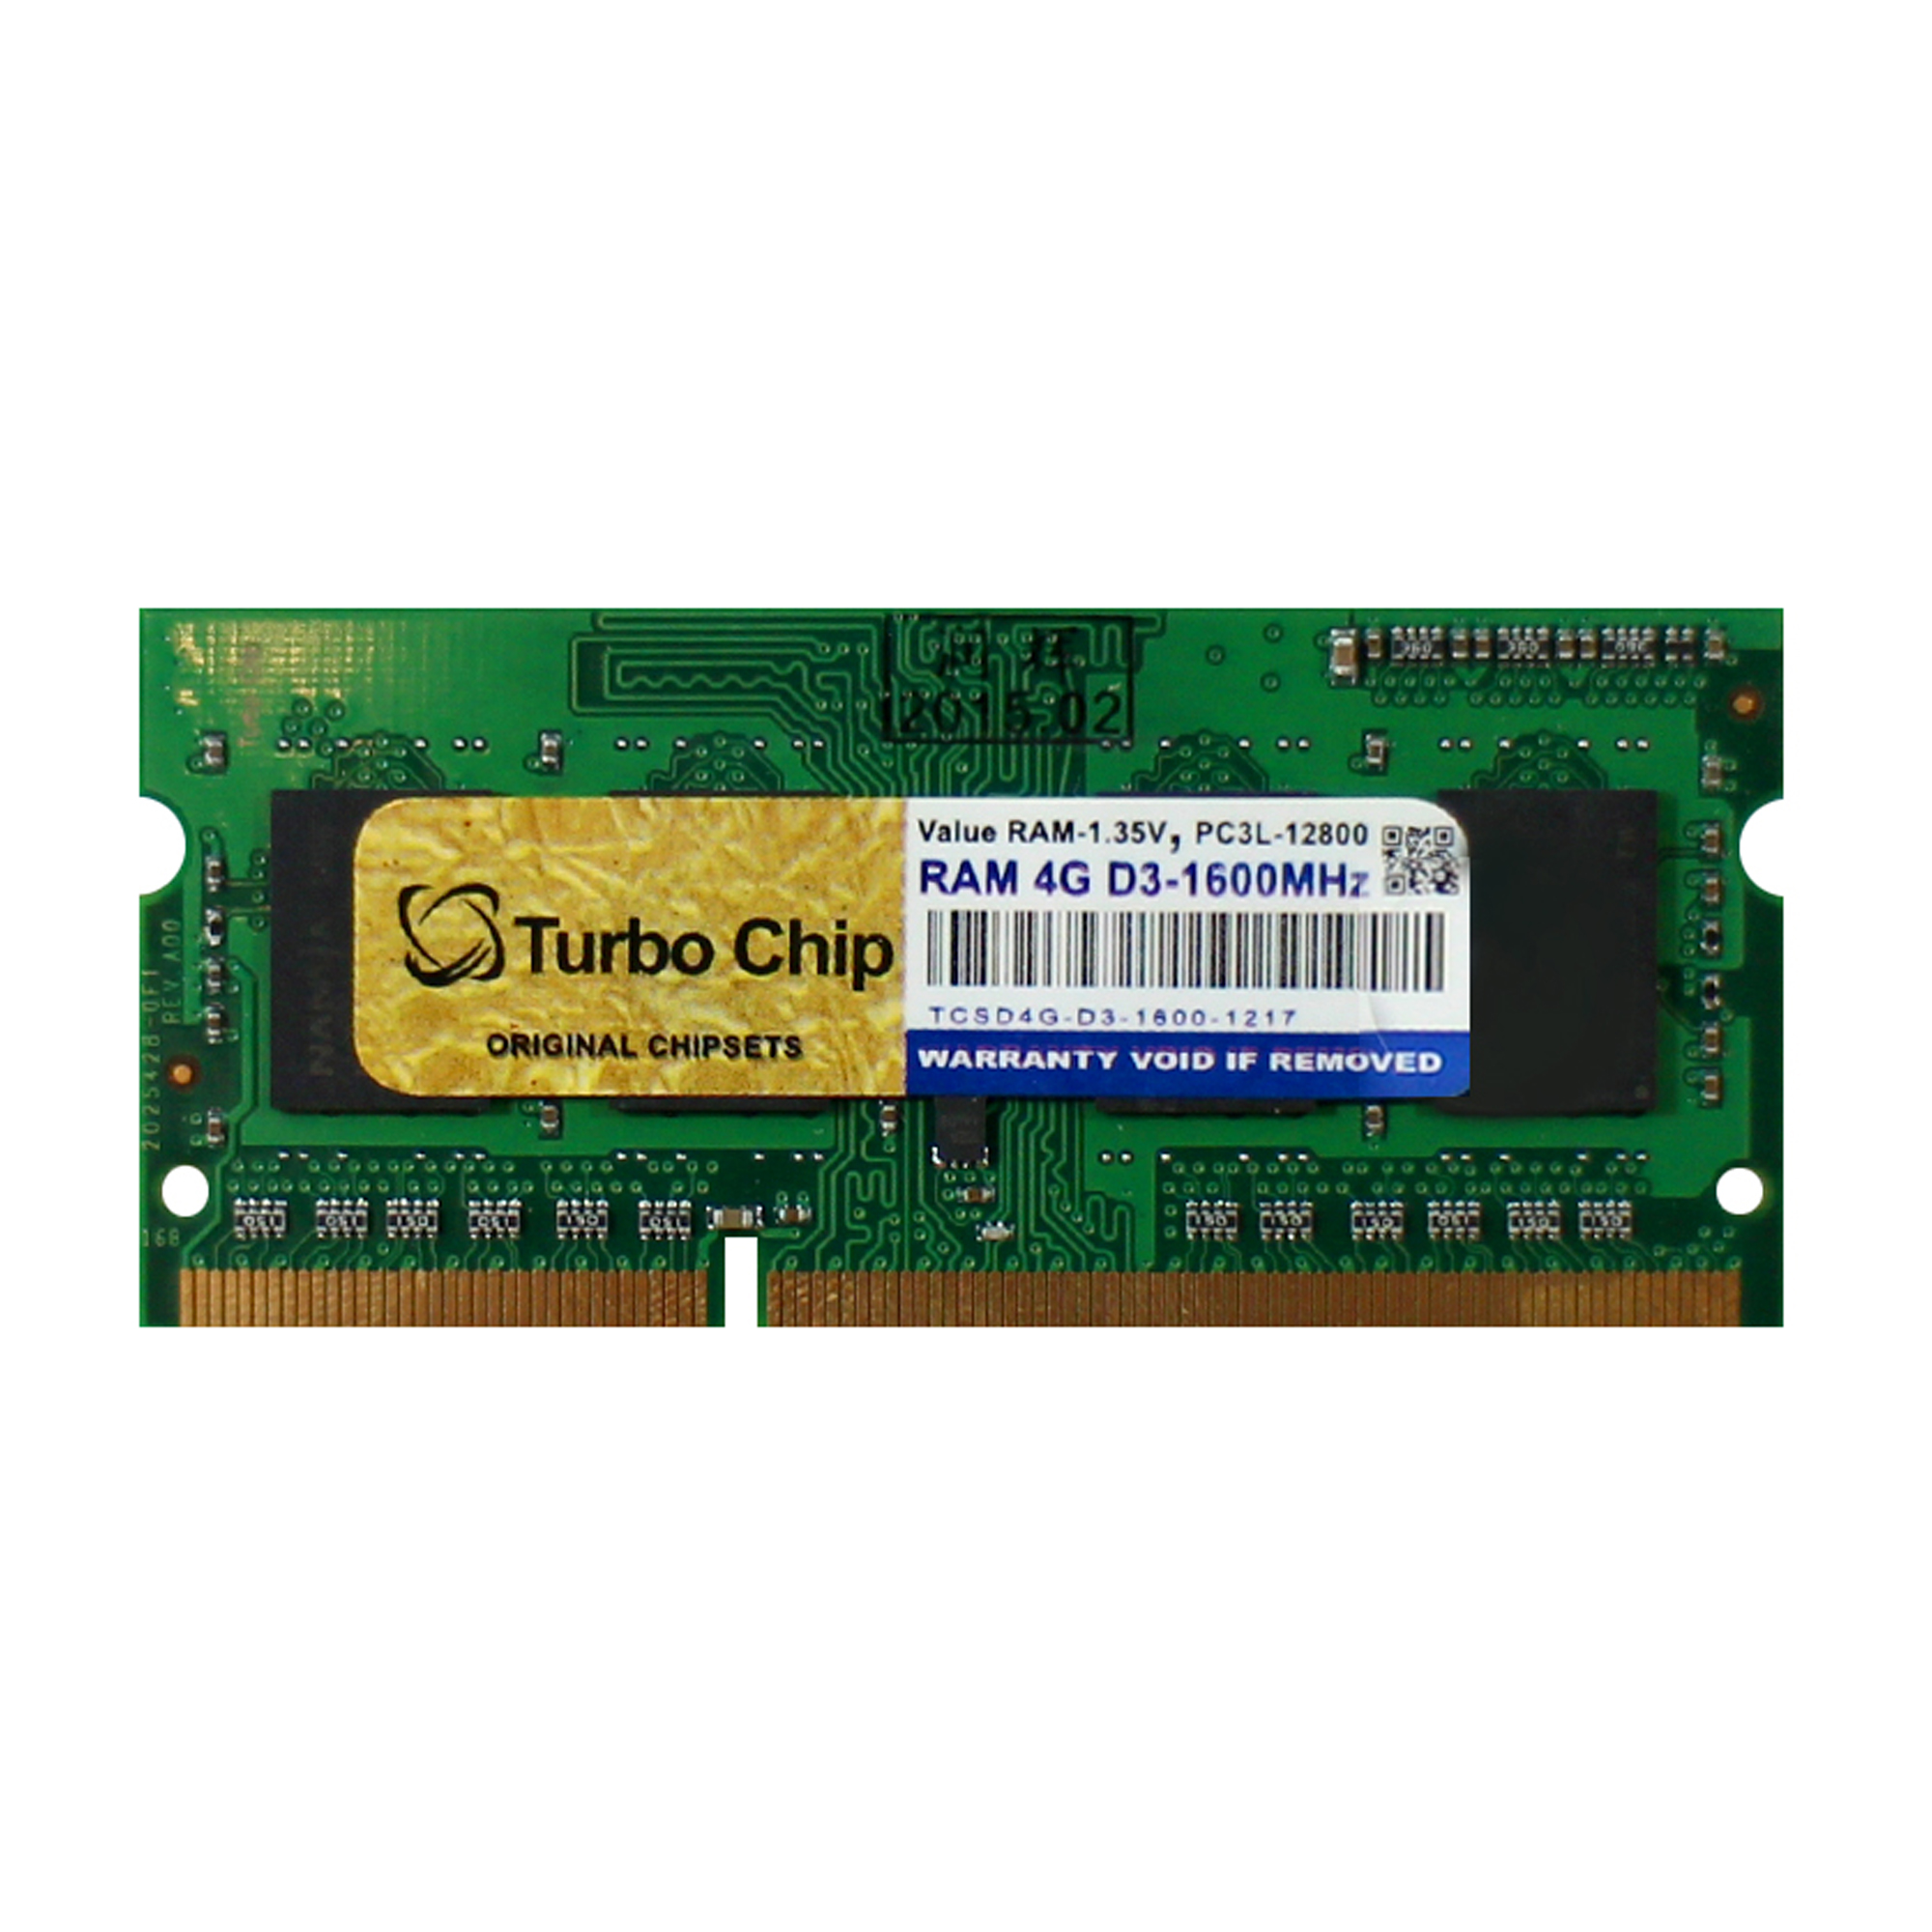 رم لپ تاپ DDR3 تک کاناله 1600 مگاهرتز CL11 توربوچیپ مدل TCSD4G-D3-1600 ظرفیت 4 گیگابایت